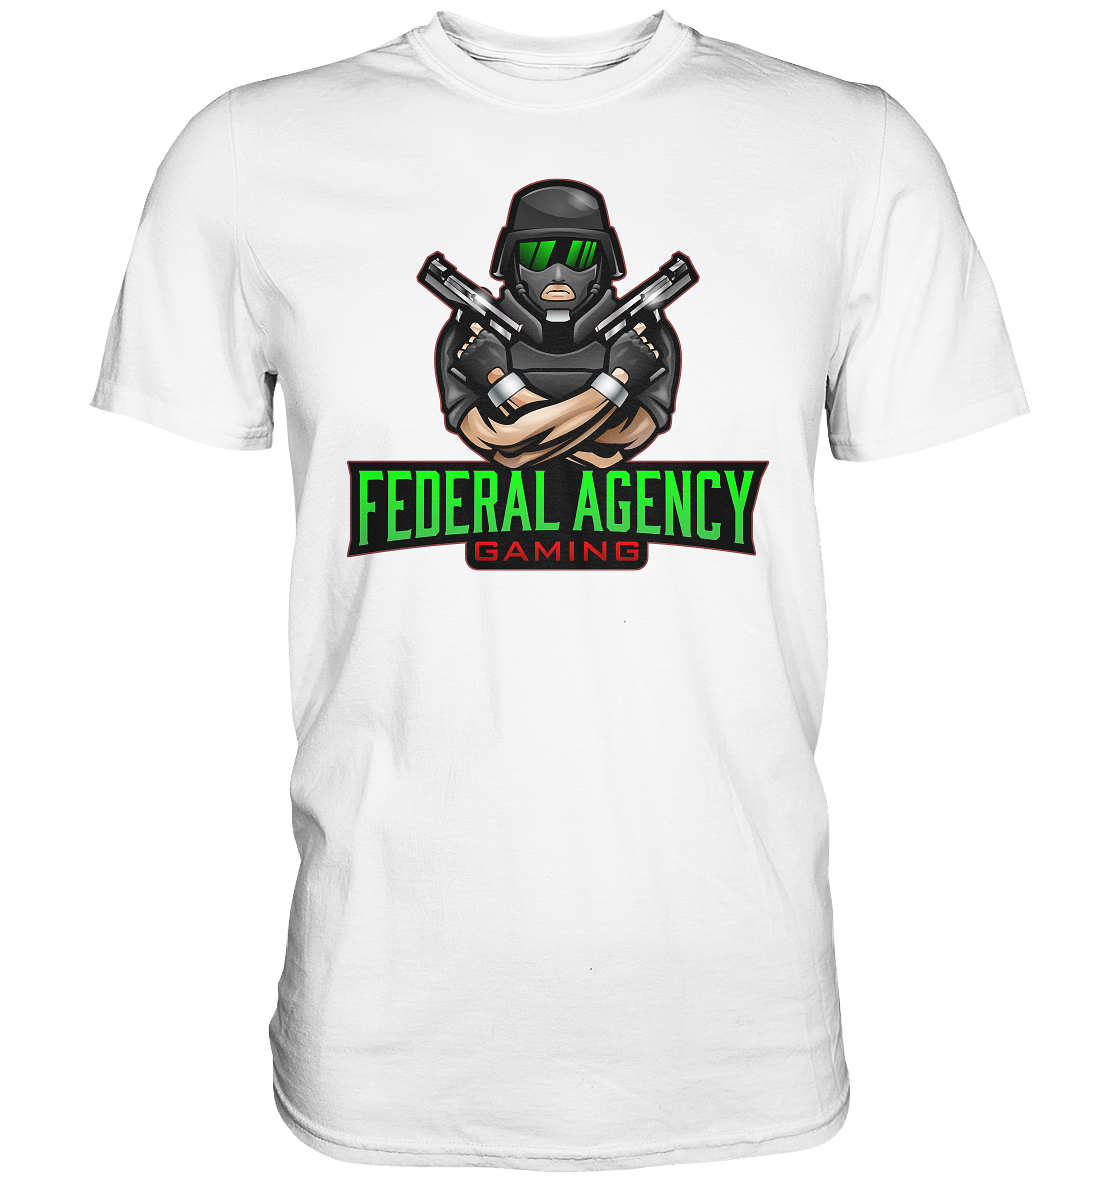 FEDERAL AGENCY GAMING - Basic Shirt